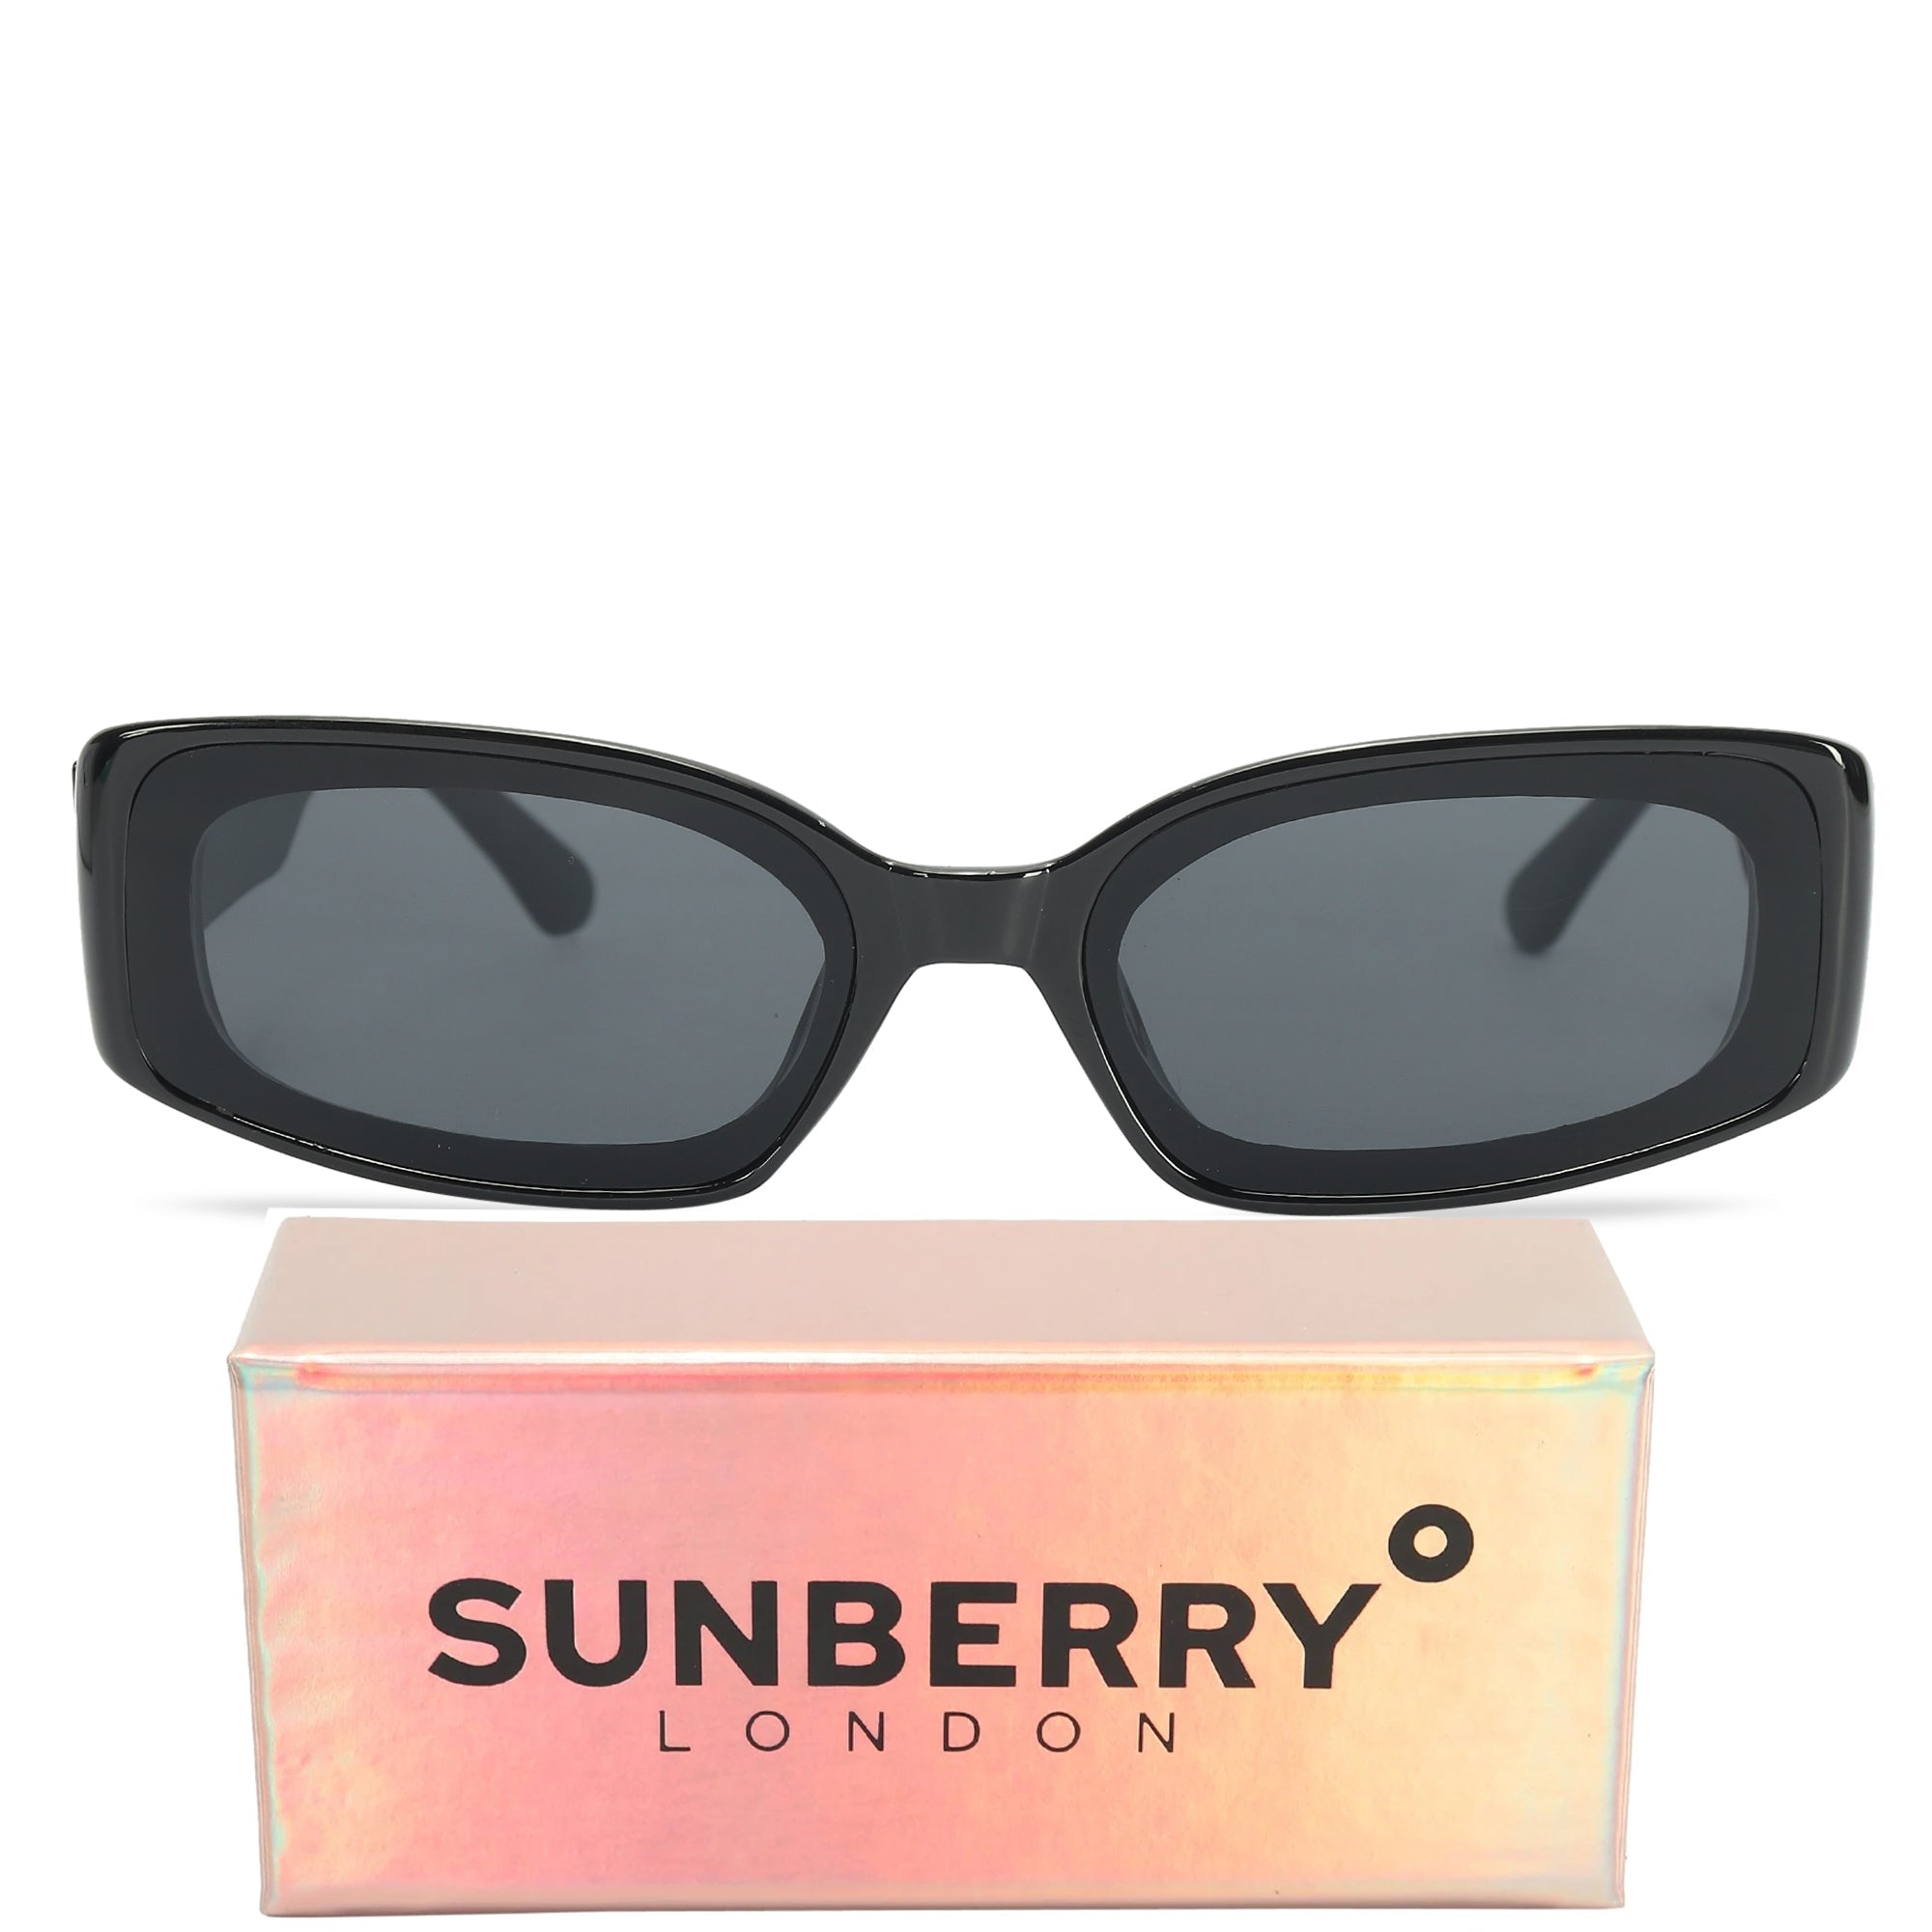 HL Sunberry Ace Glasses